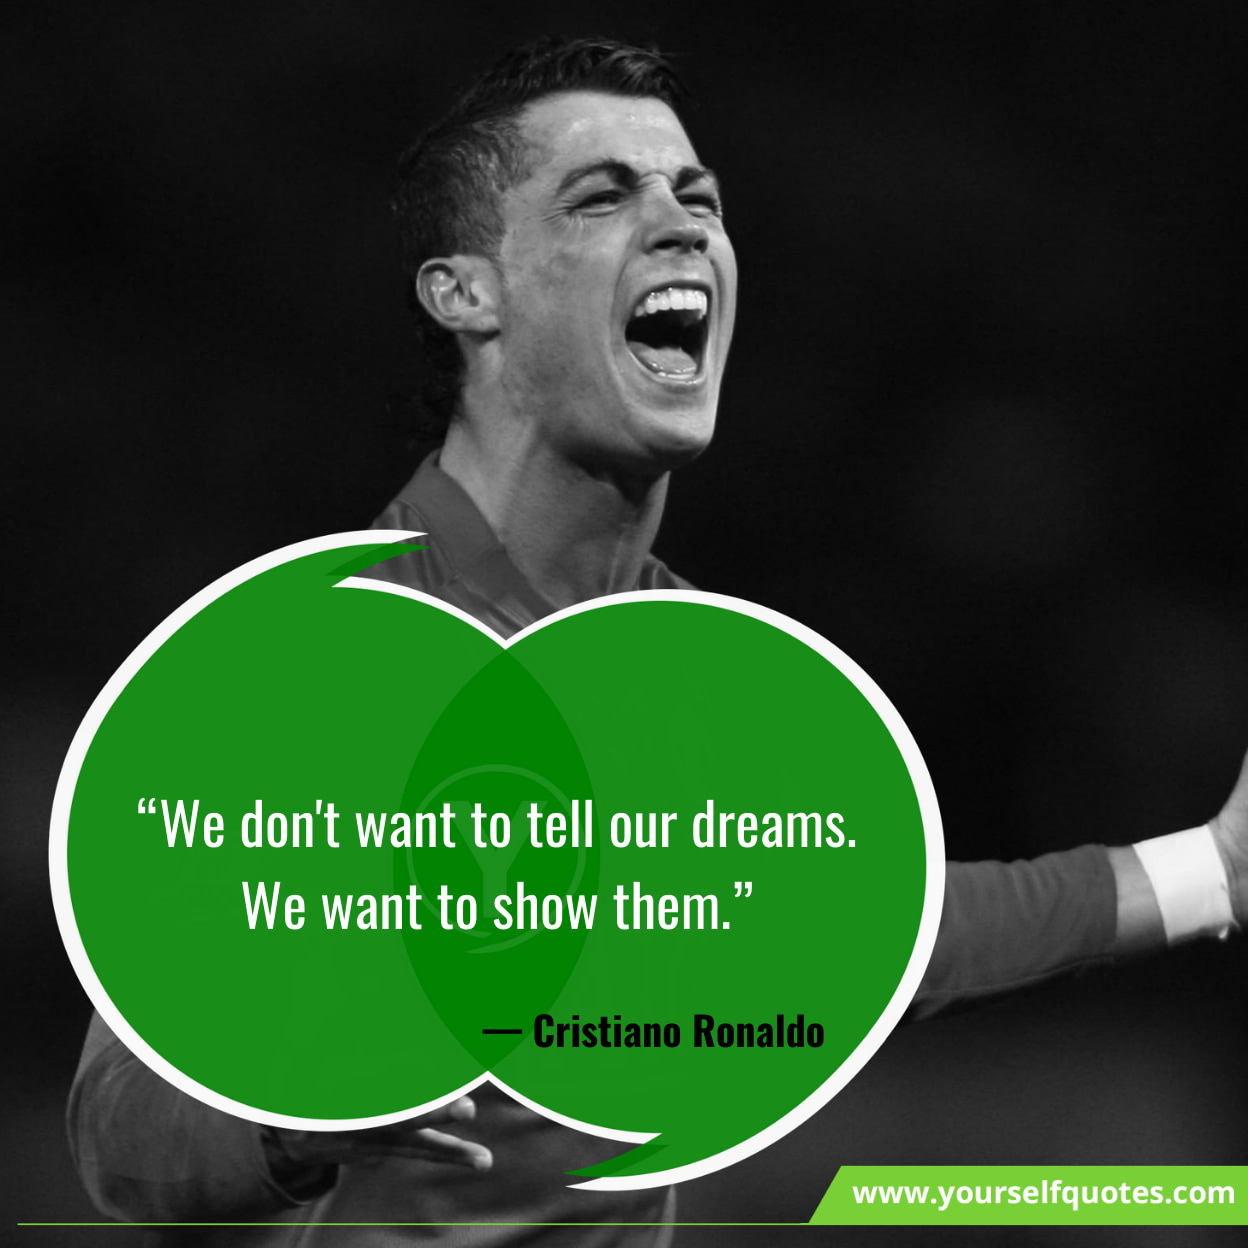 Cristiano Ronaldo Quotes On Success